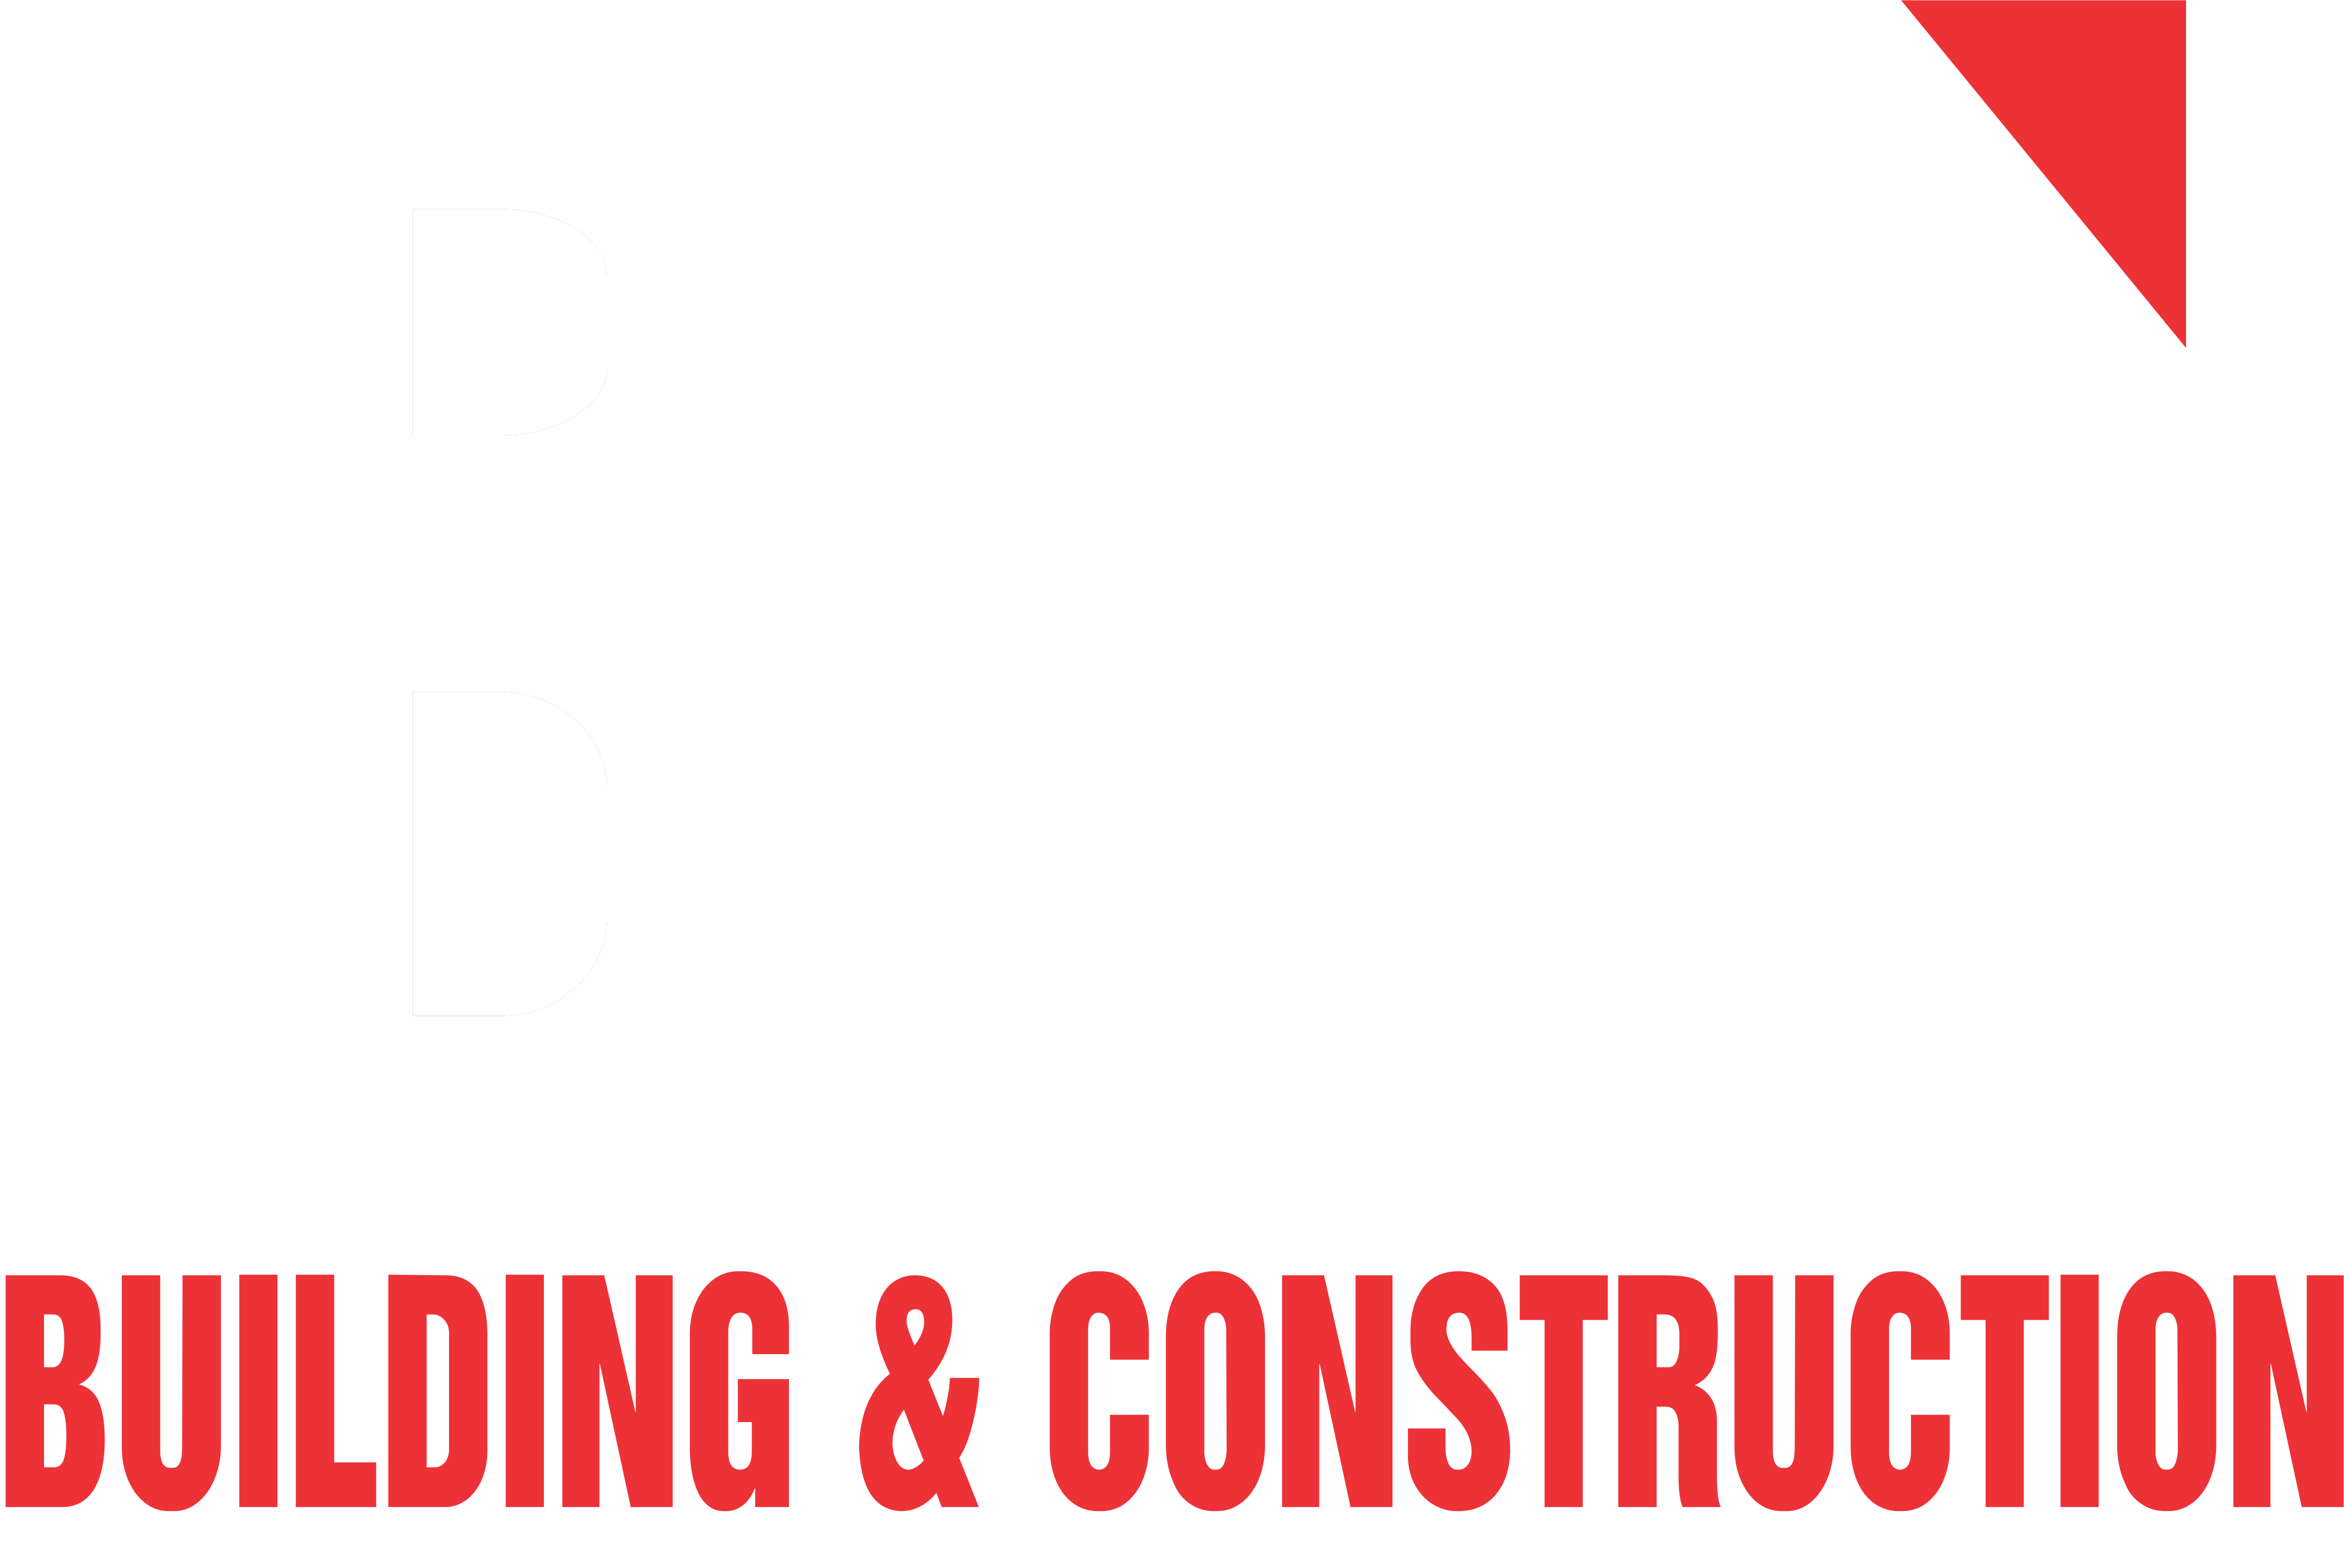 Bhi Logo - logo bhi white on black